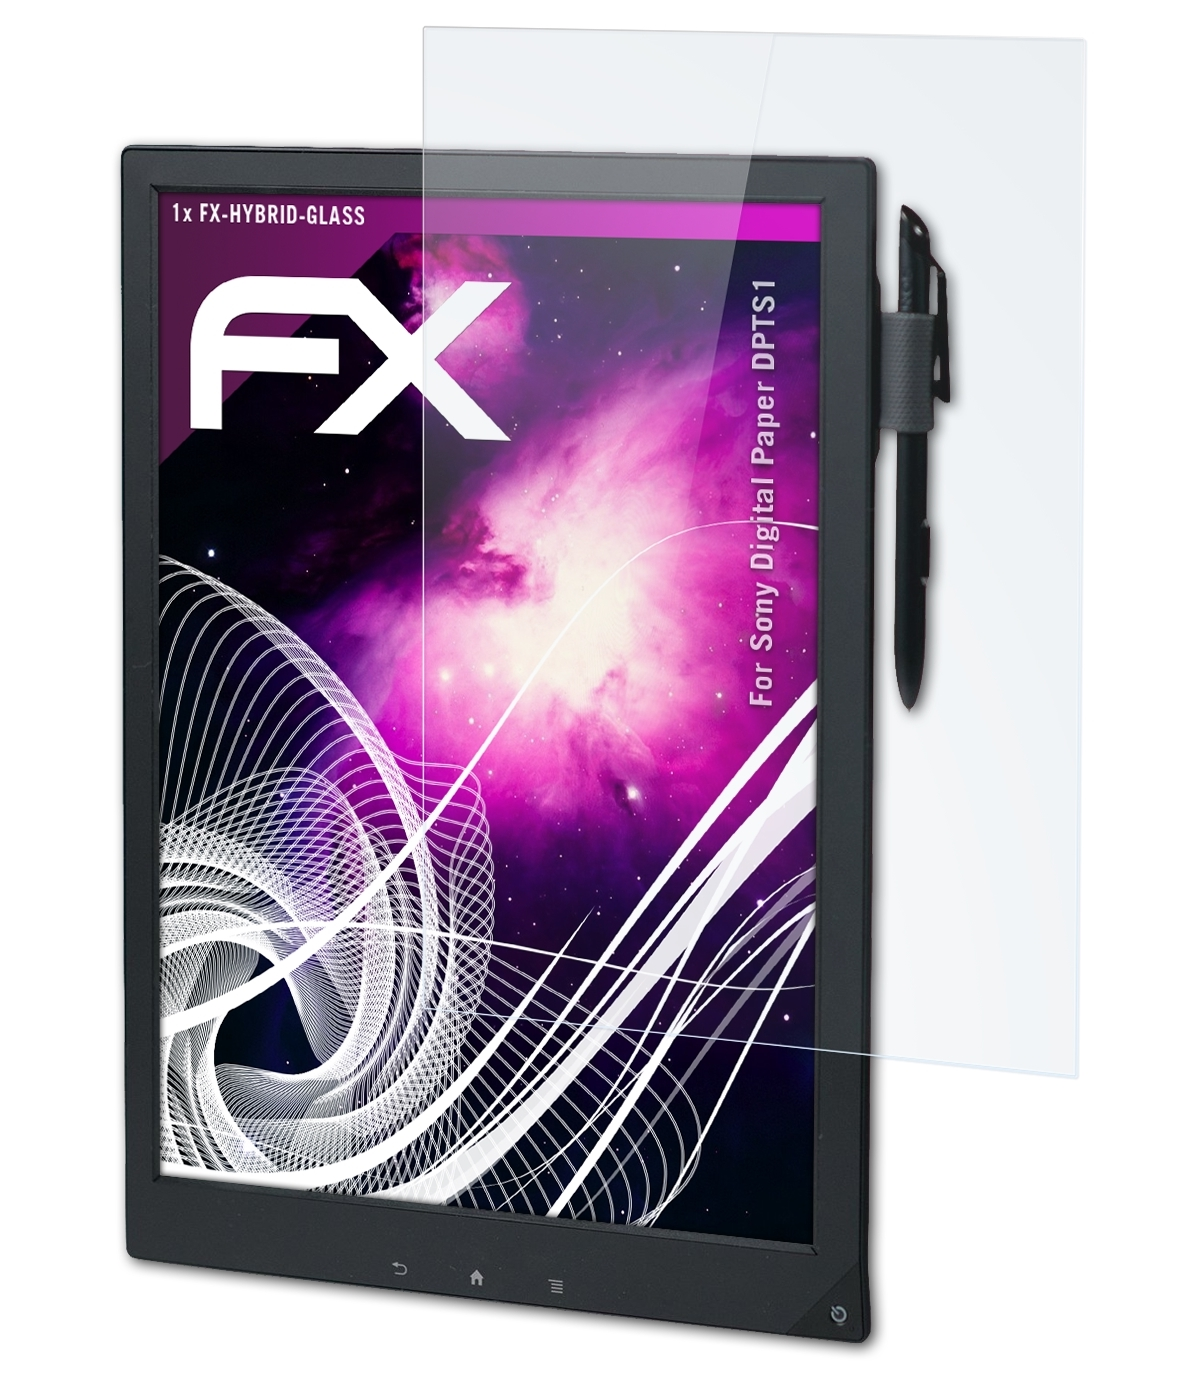 Digital Sony FX-Hybrid-Glass (DPTS1)) Paper Schutzglas(für ATFOLIX